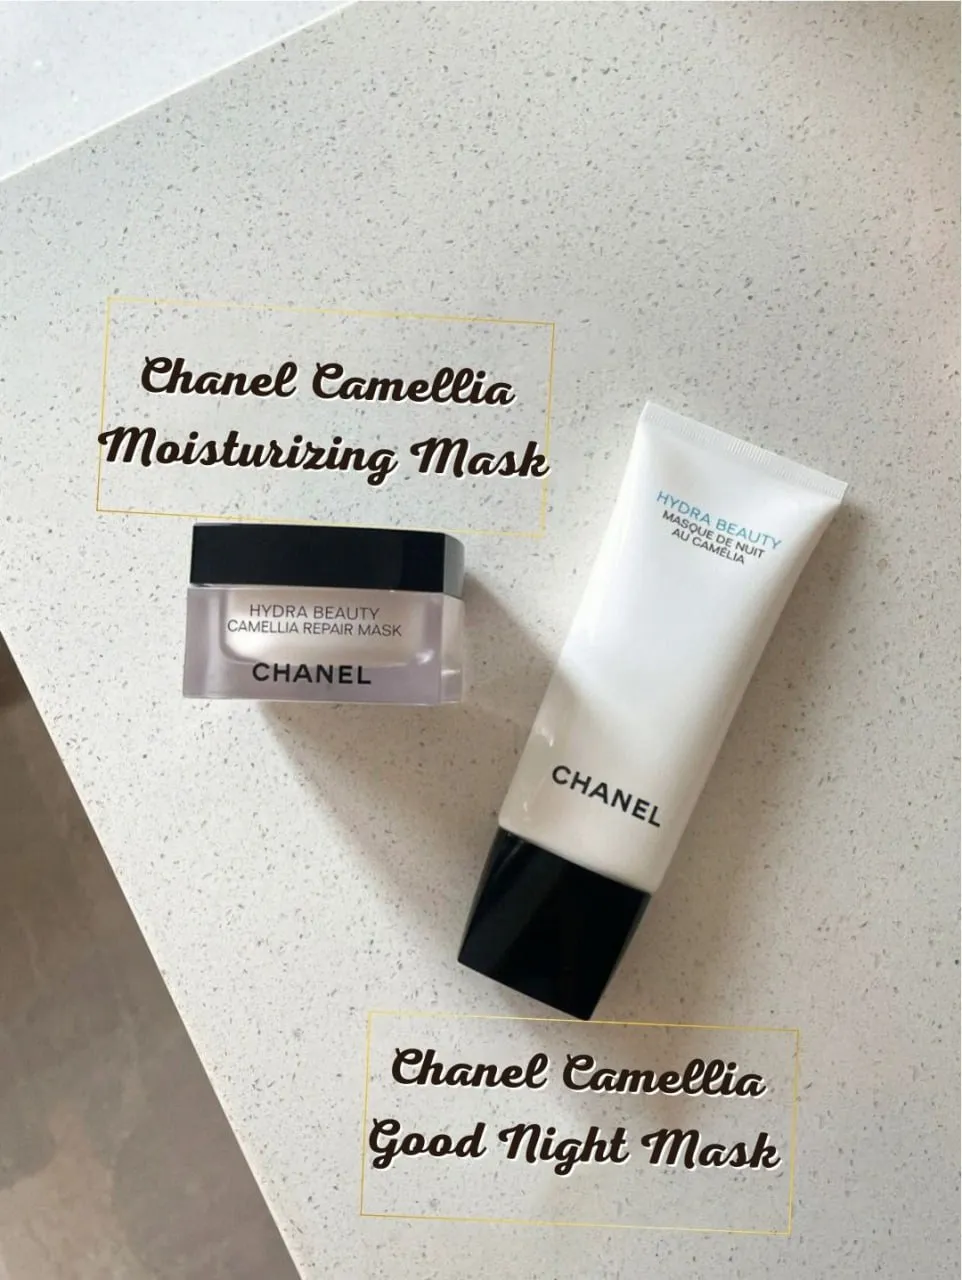 Chanel Hydra Beauty Masque De Nuit Au Camelia Hydrating Oxygenating  Overnight Mask 100ml/3.4oz